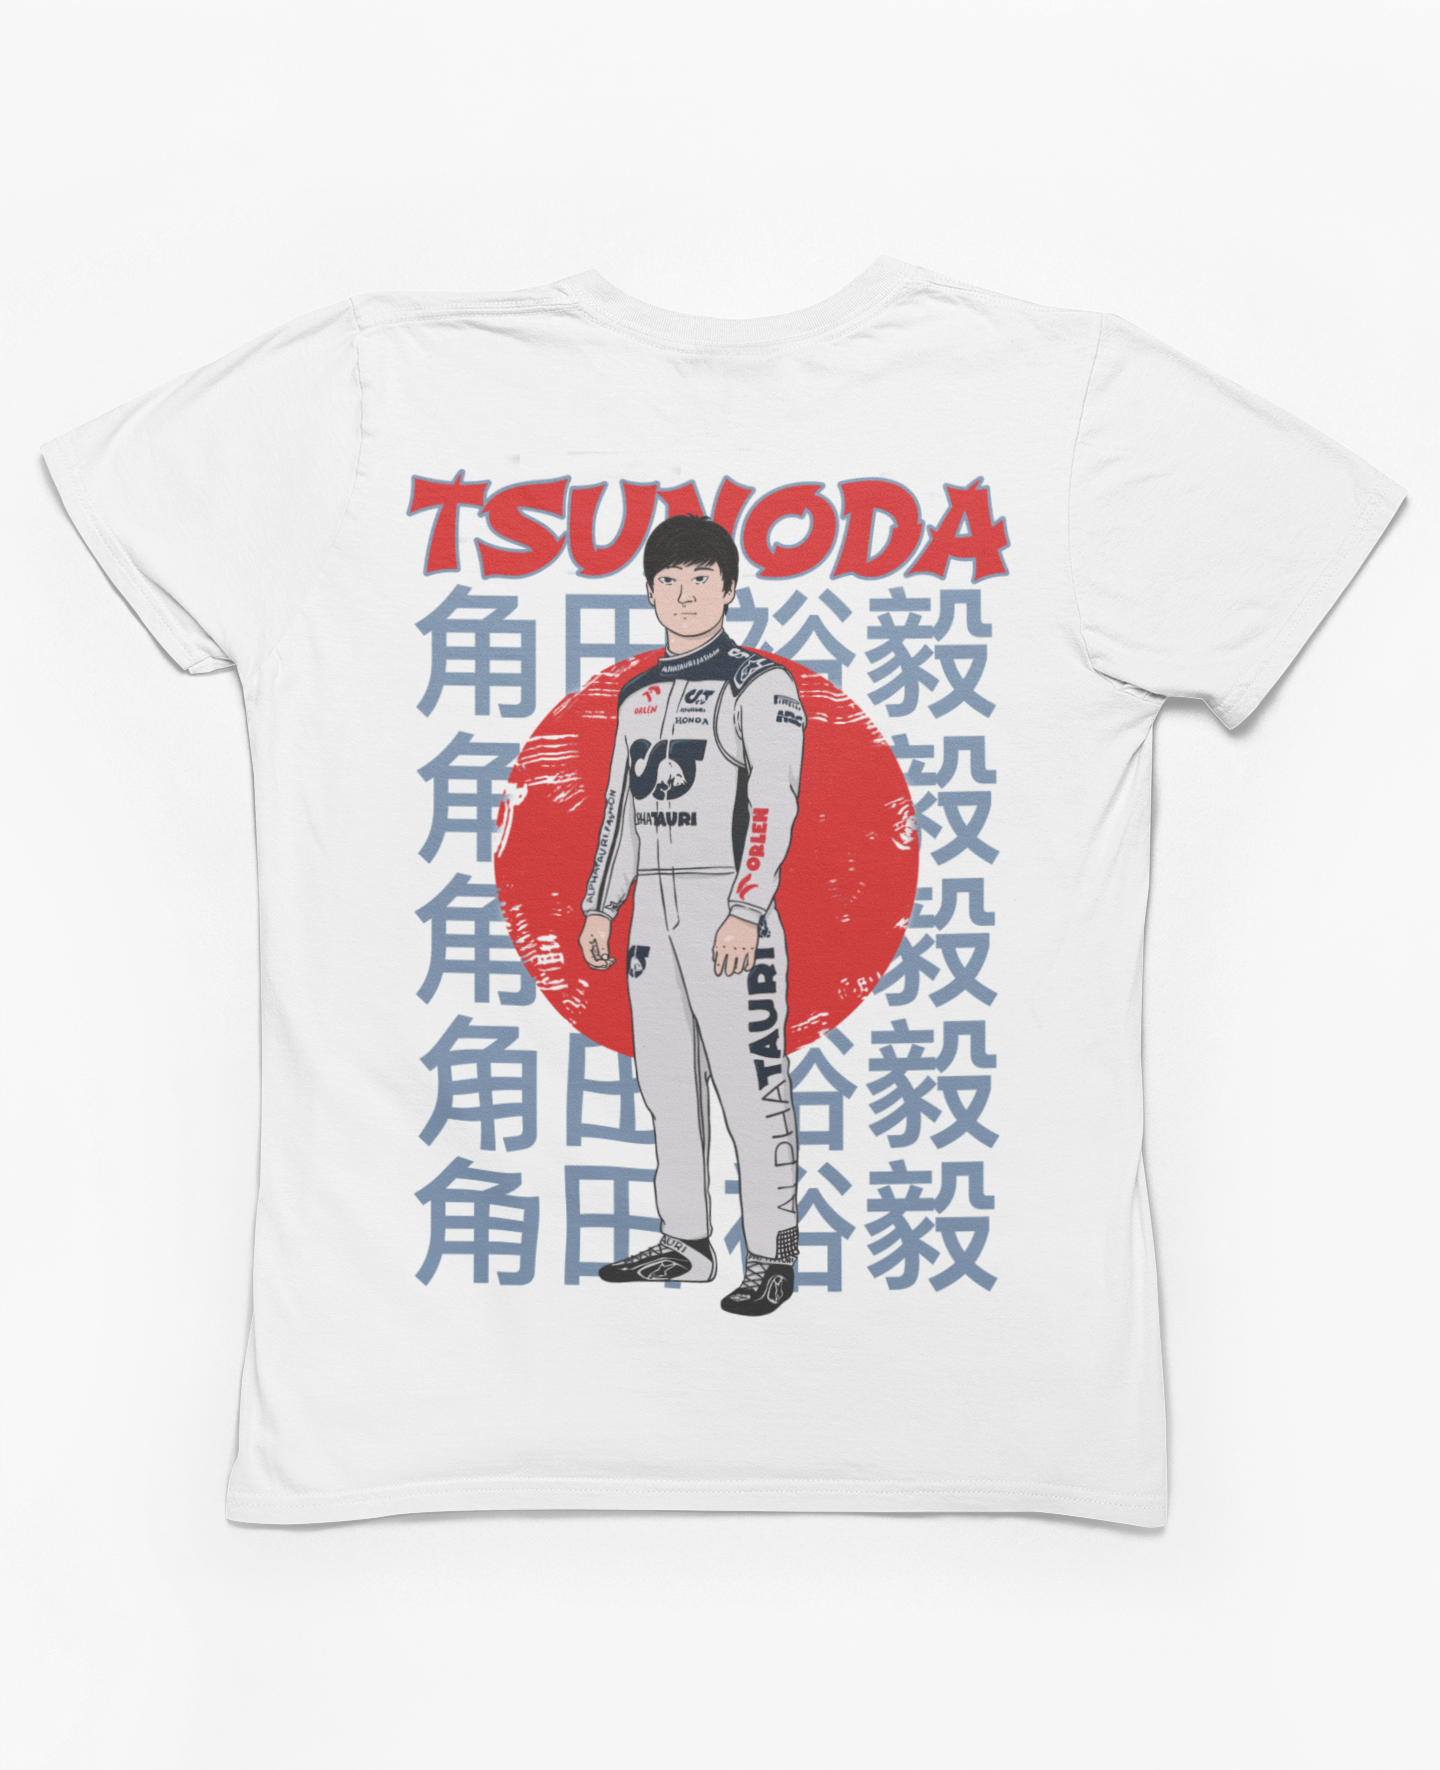 Yuki Tsunoda T-shirt